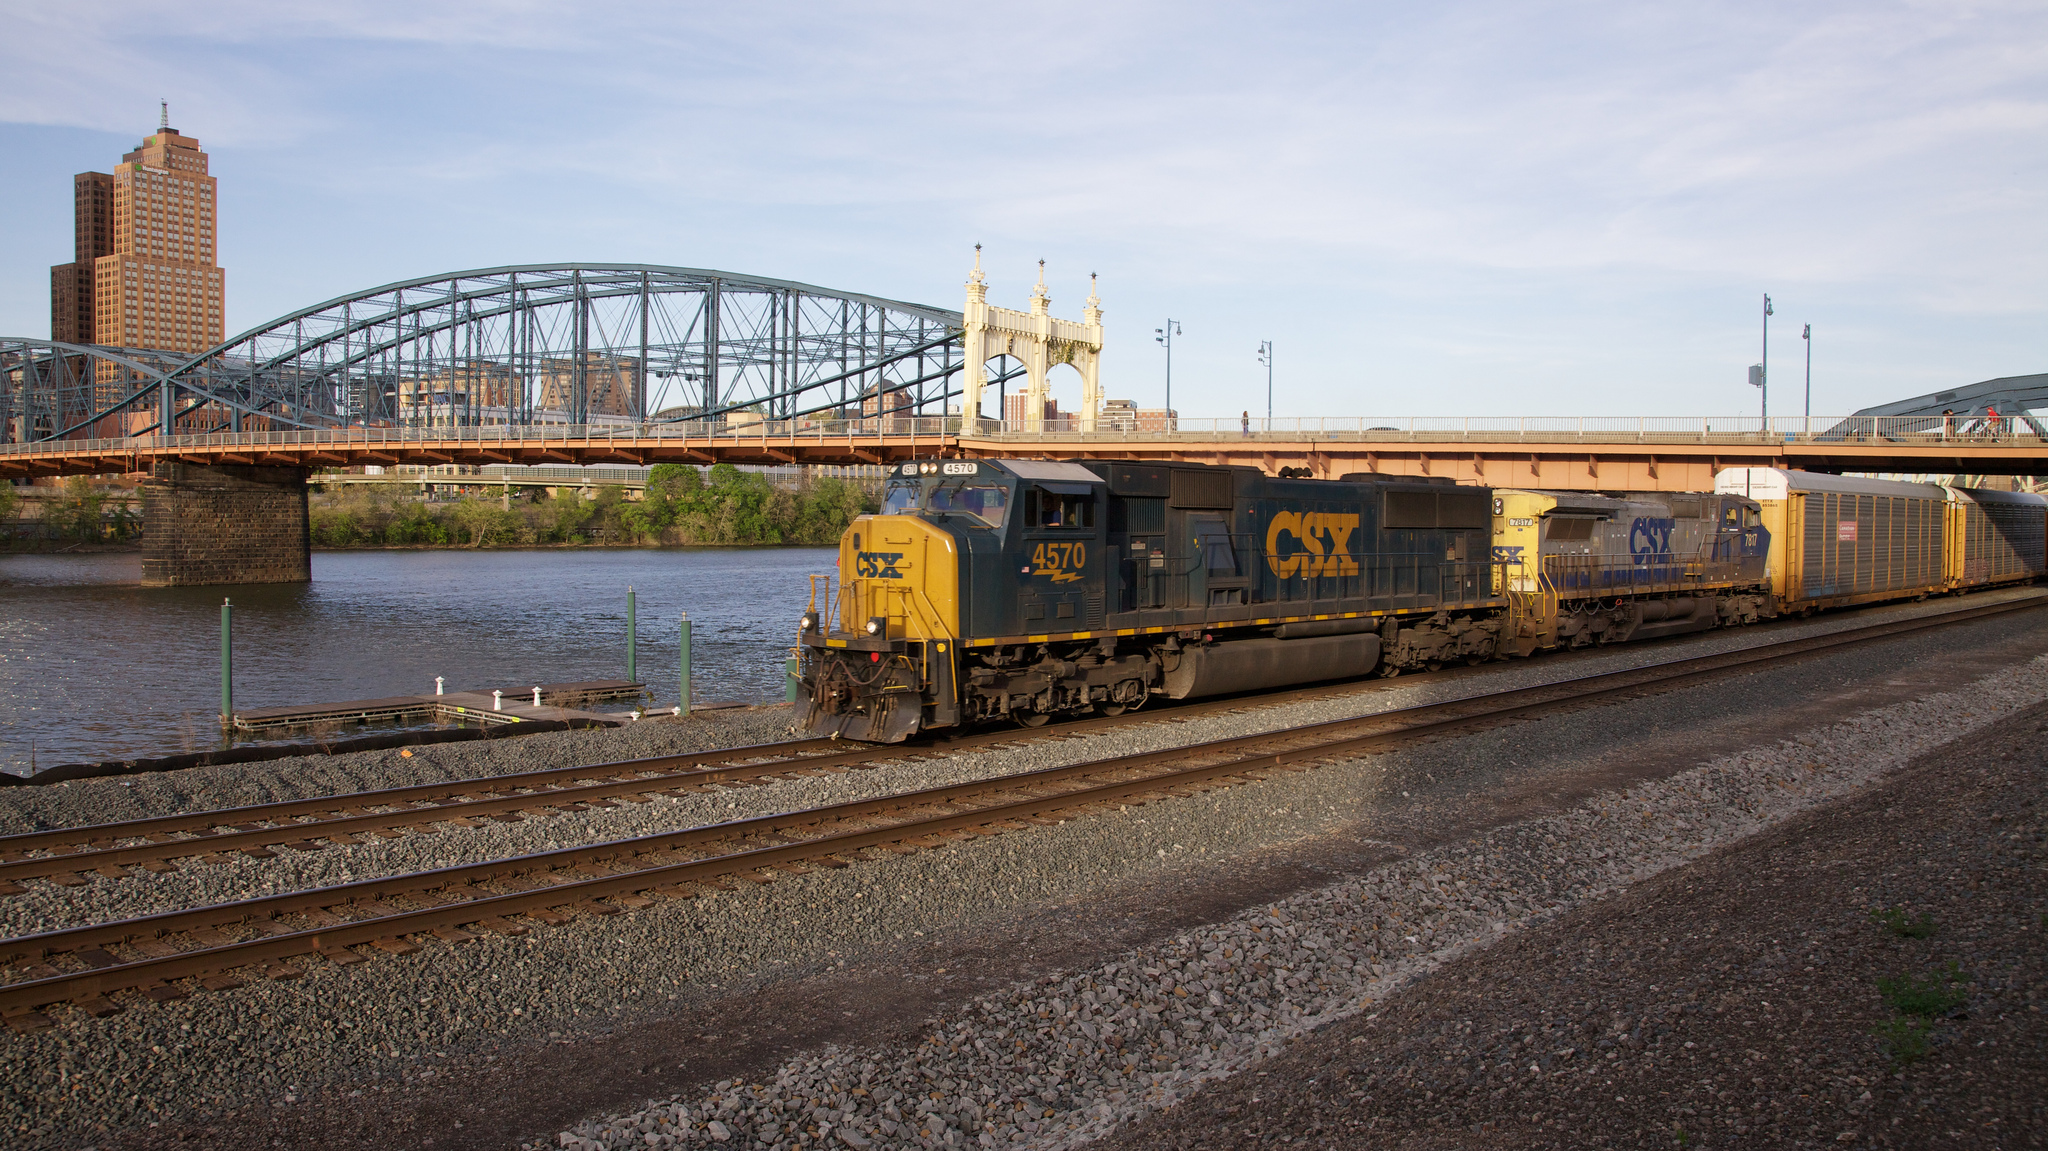 Csx Train Crossing Under The Smithfield Bridge In Pittsburgh